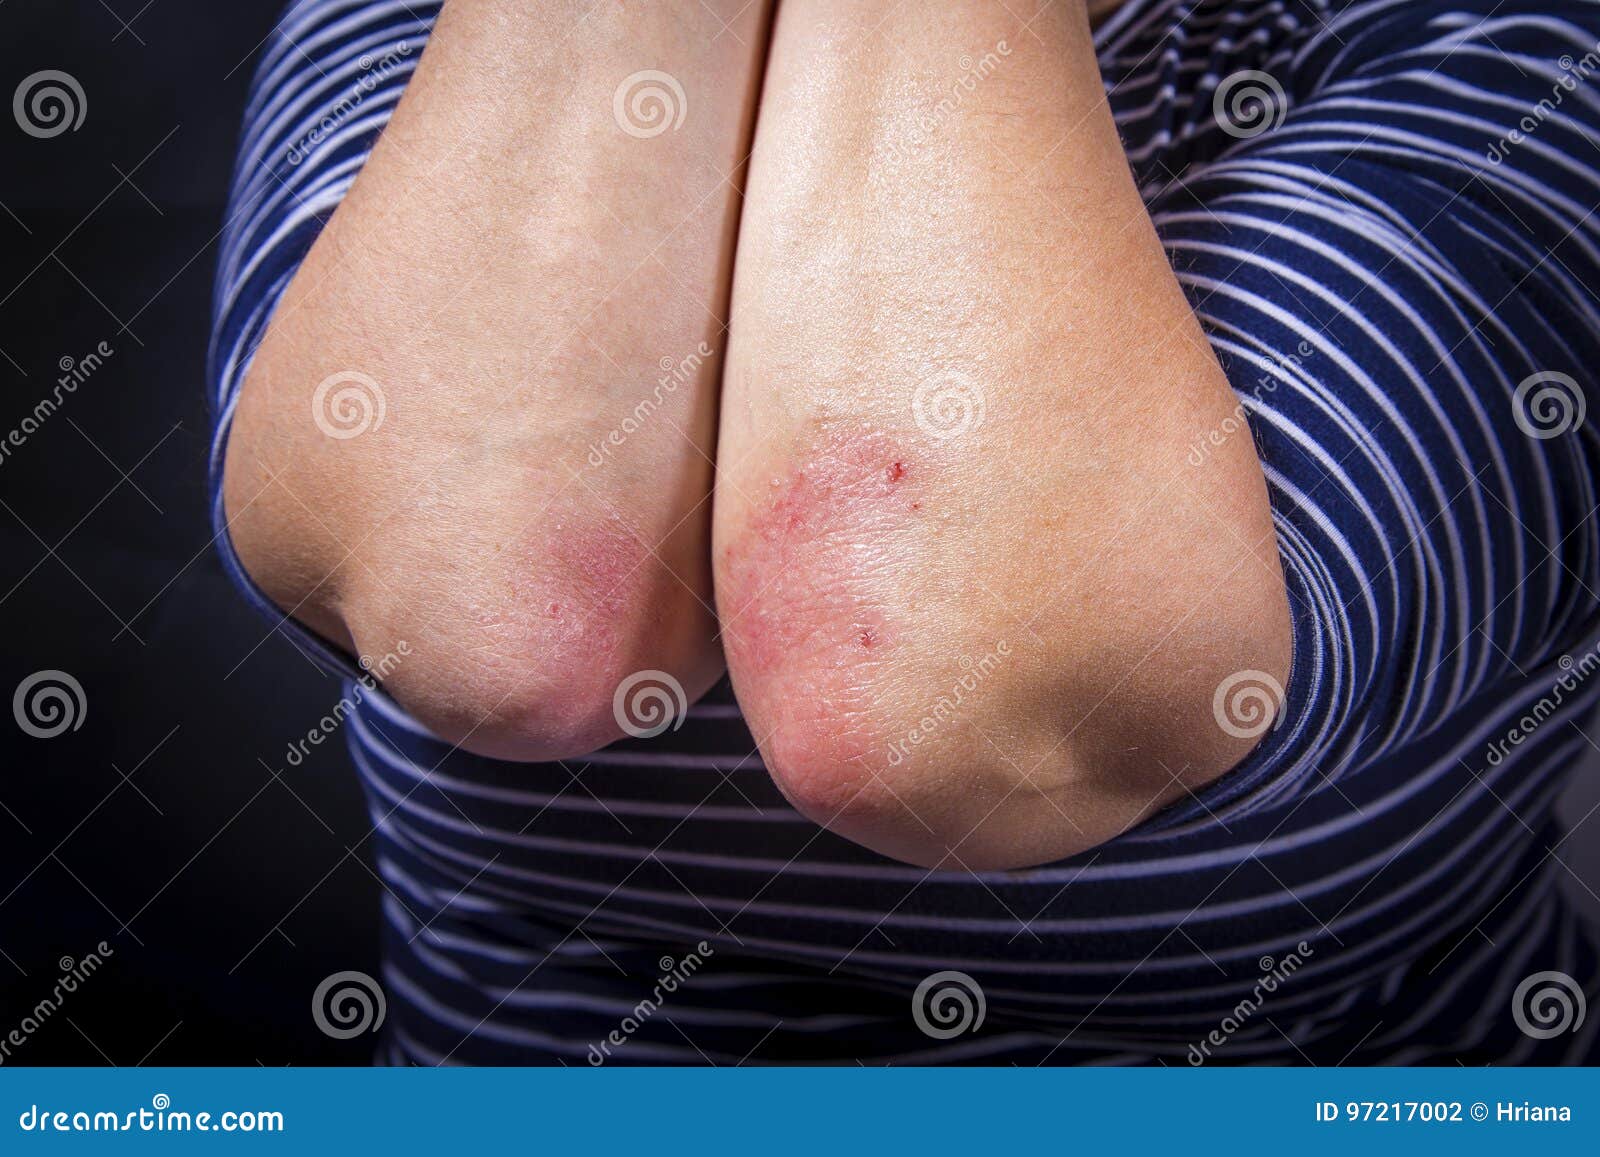 psoriasis on elbow